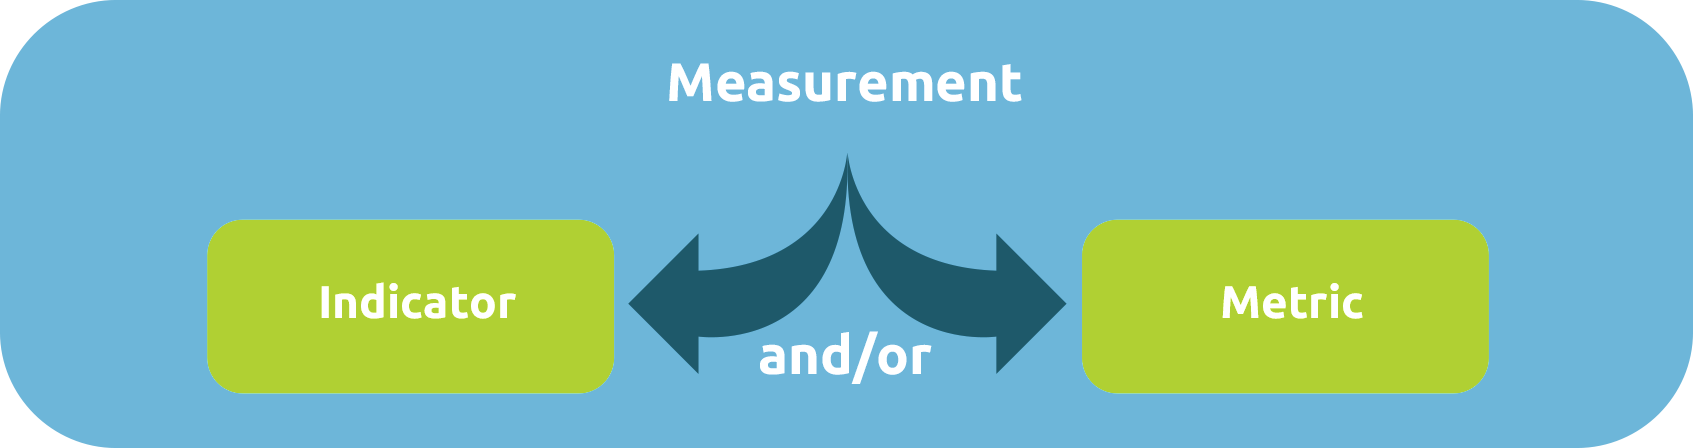 Indicator and metrics 